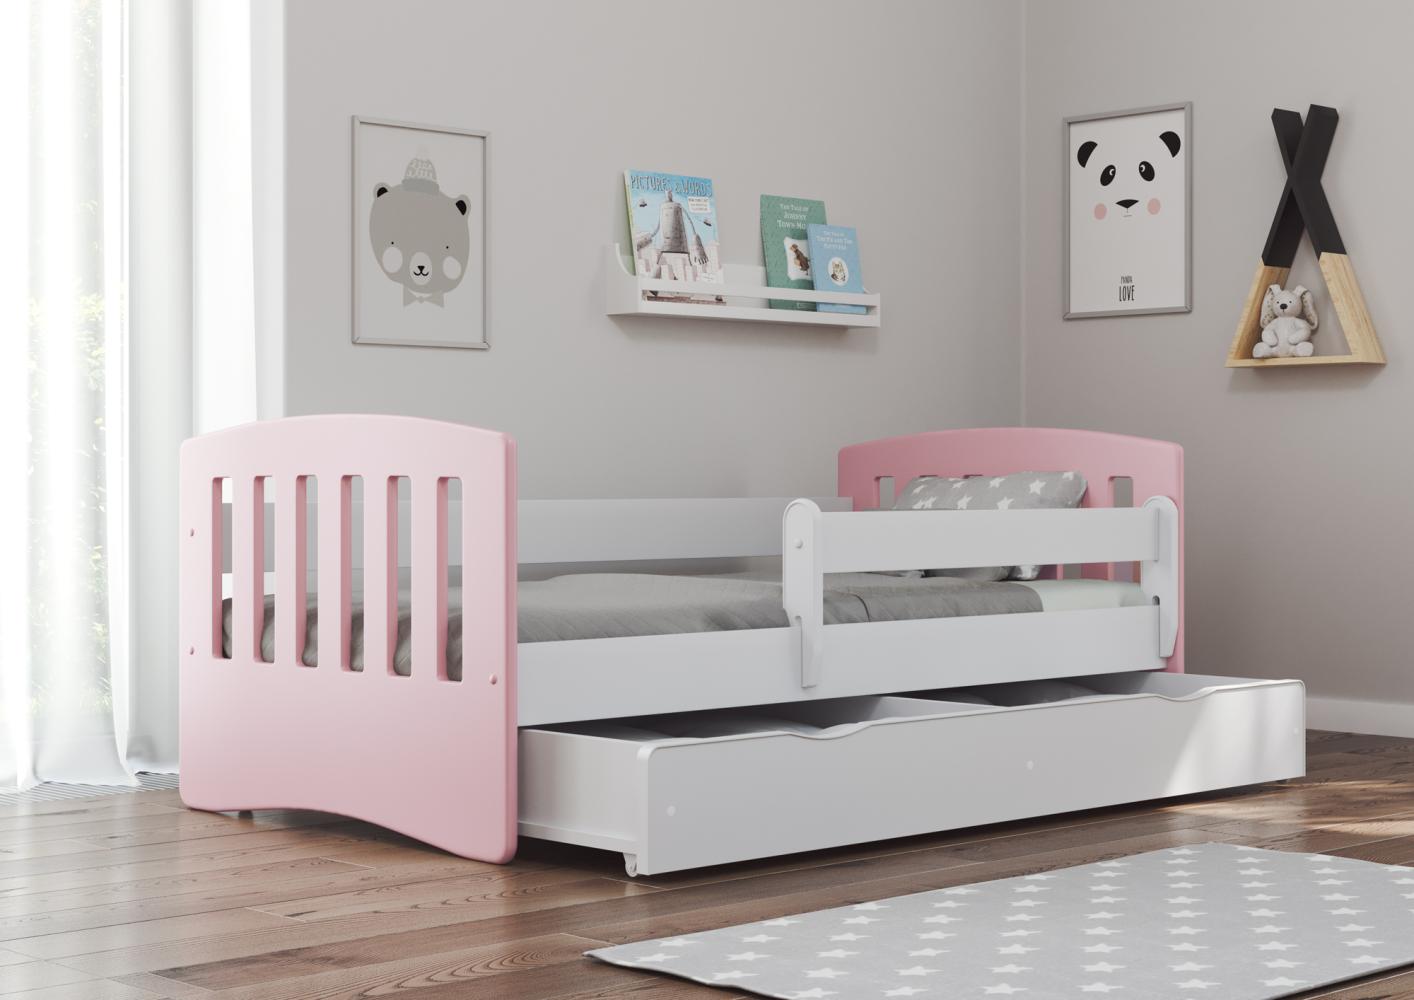 Bjird 'Classic' Kinderbett 80 x 160 cm, Puderrosa, inkl. Rausfallschutz, Lattenrost und Bettschublade Bild 1